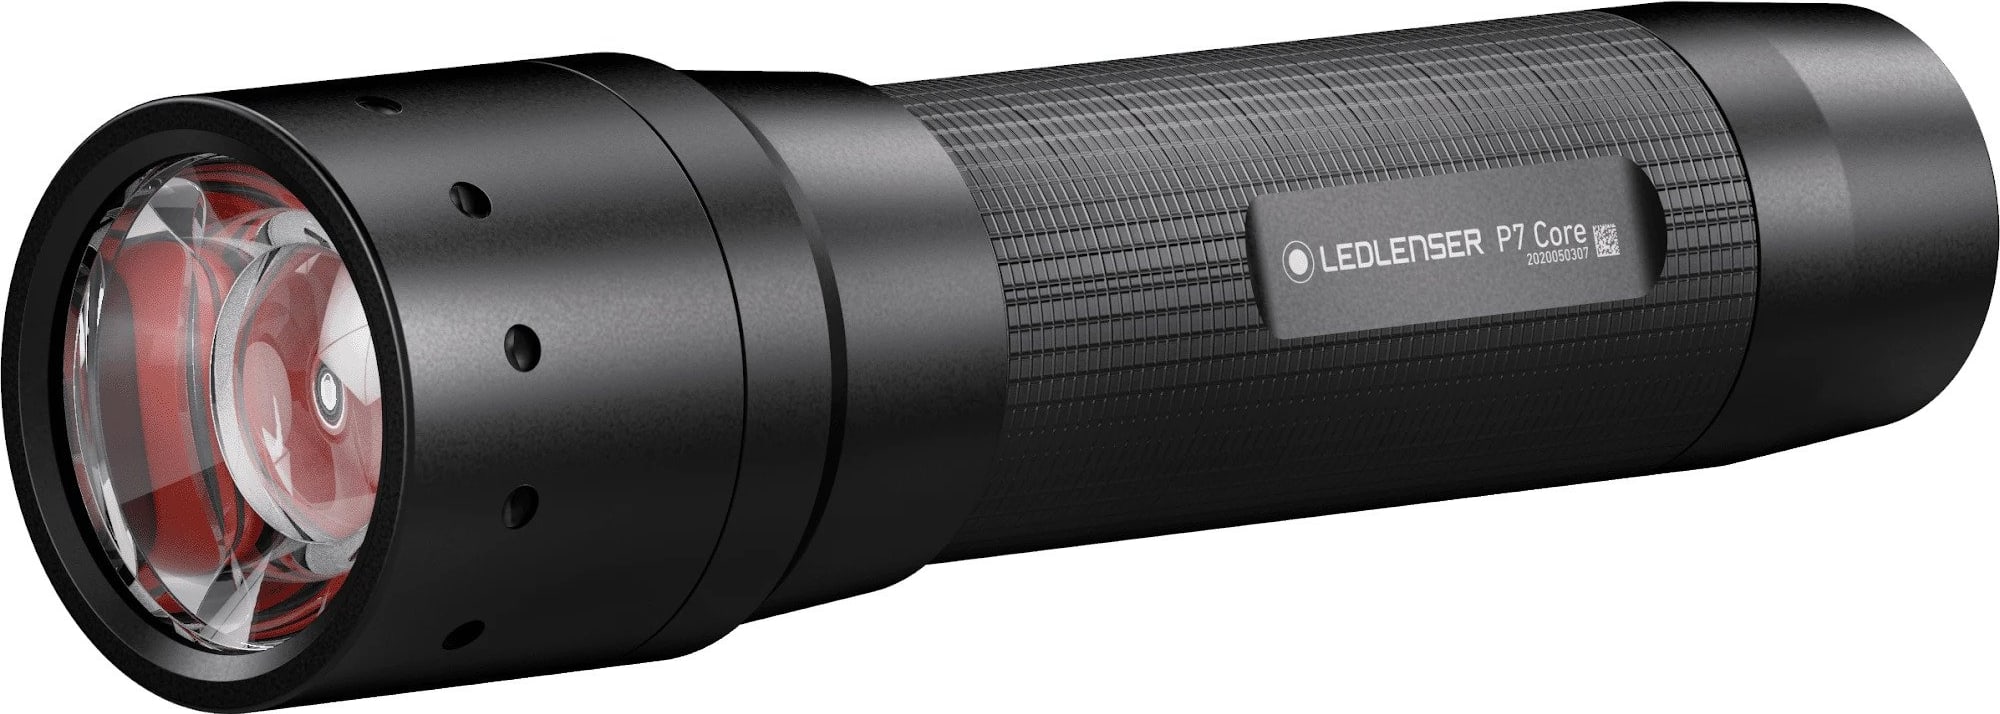 Transcend Svare Viewer LED Lenser P7 Core - Flashlight with 450 Lumens | TEquipment